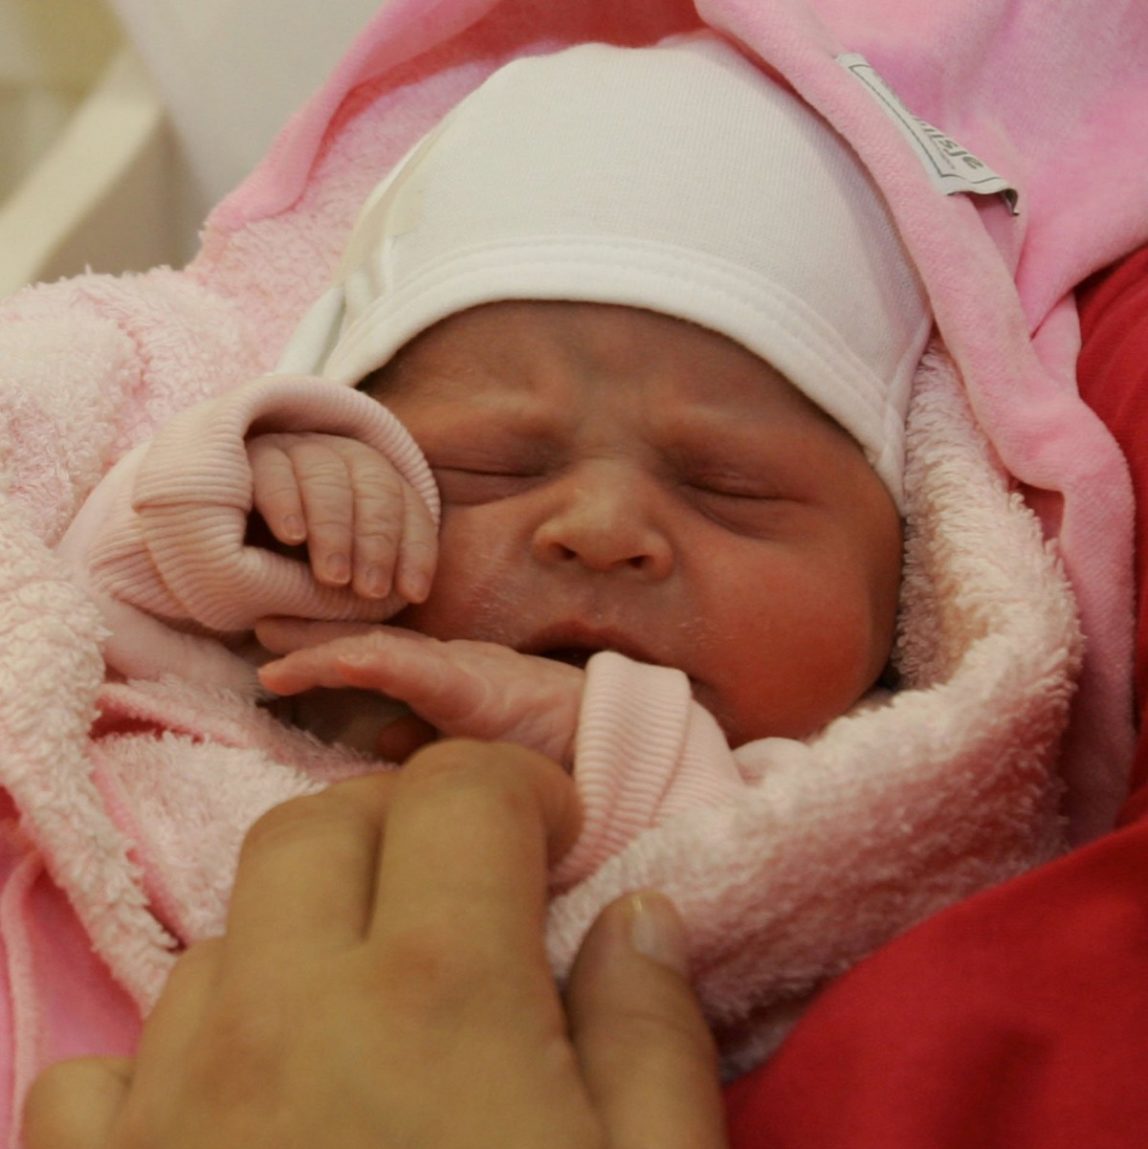 A newborn baby is seen on Tuesday, Oct. 18, 2005. (AP Photo/Pool/Maartje Blijdenstein)